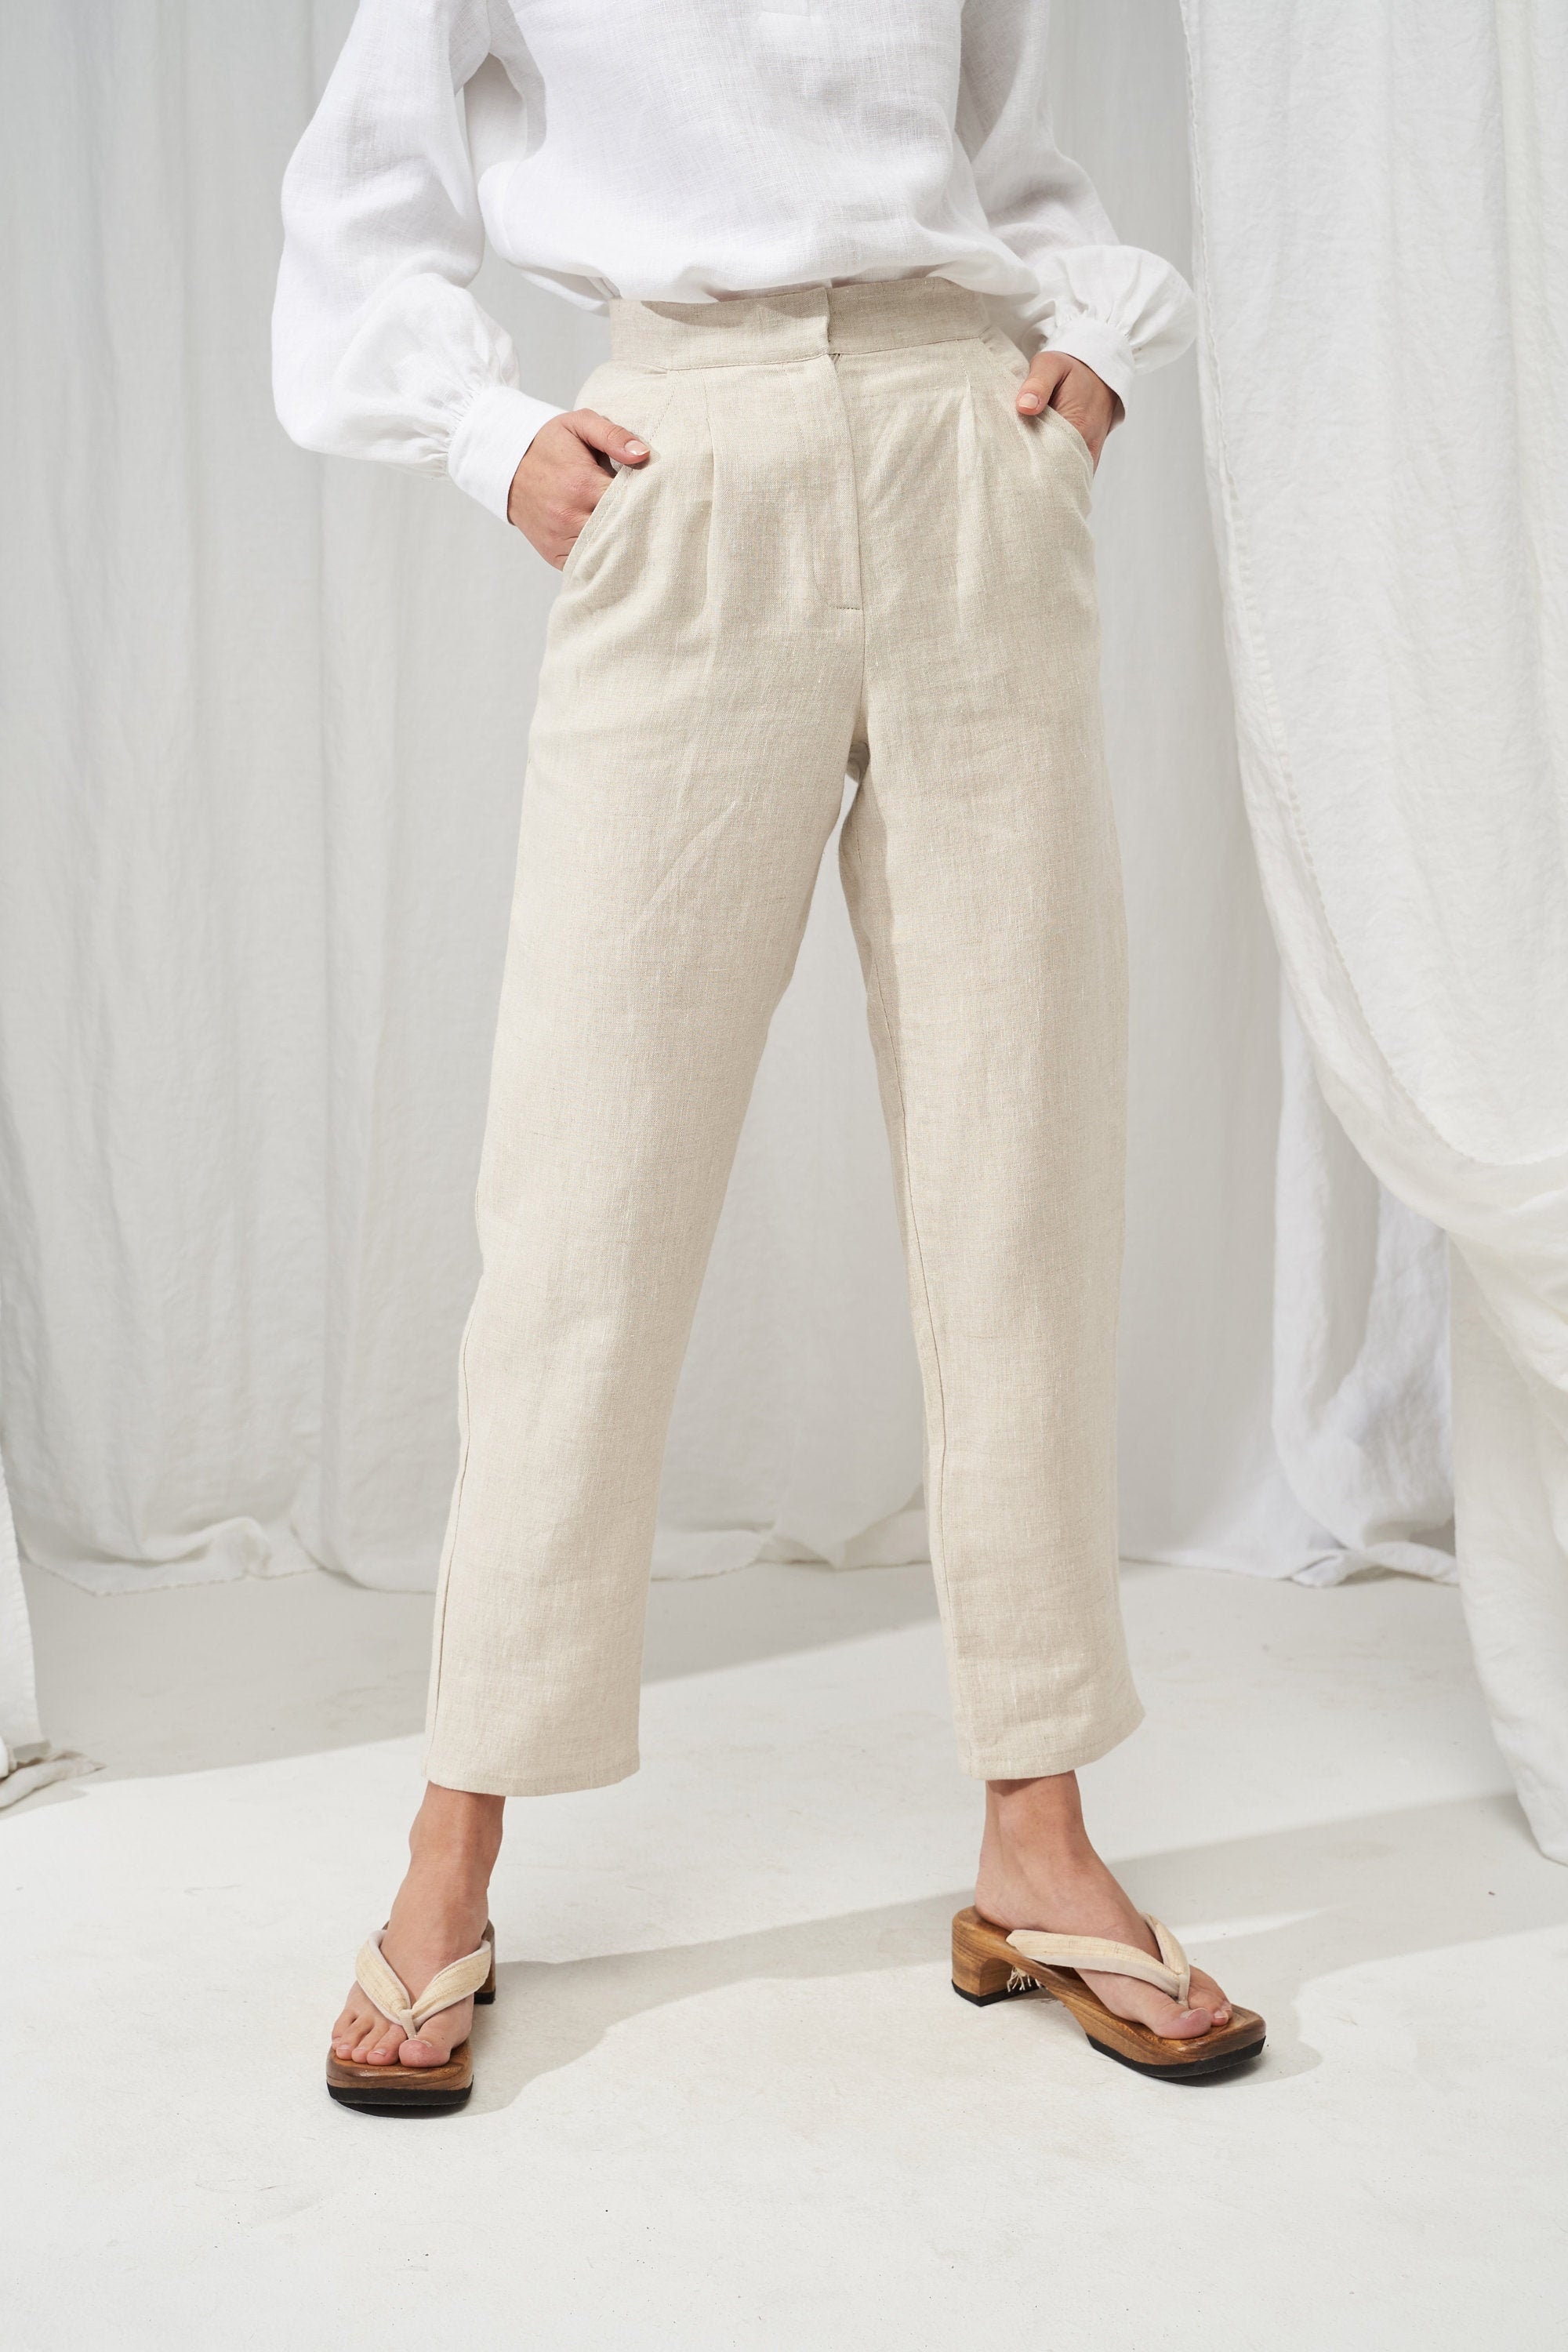 High Waisted Linen Pants DELANEY Tapered Linen Pants Linen | Etsy